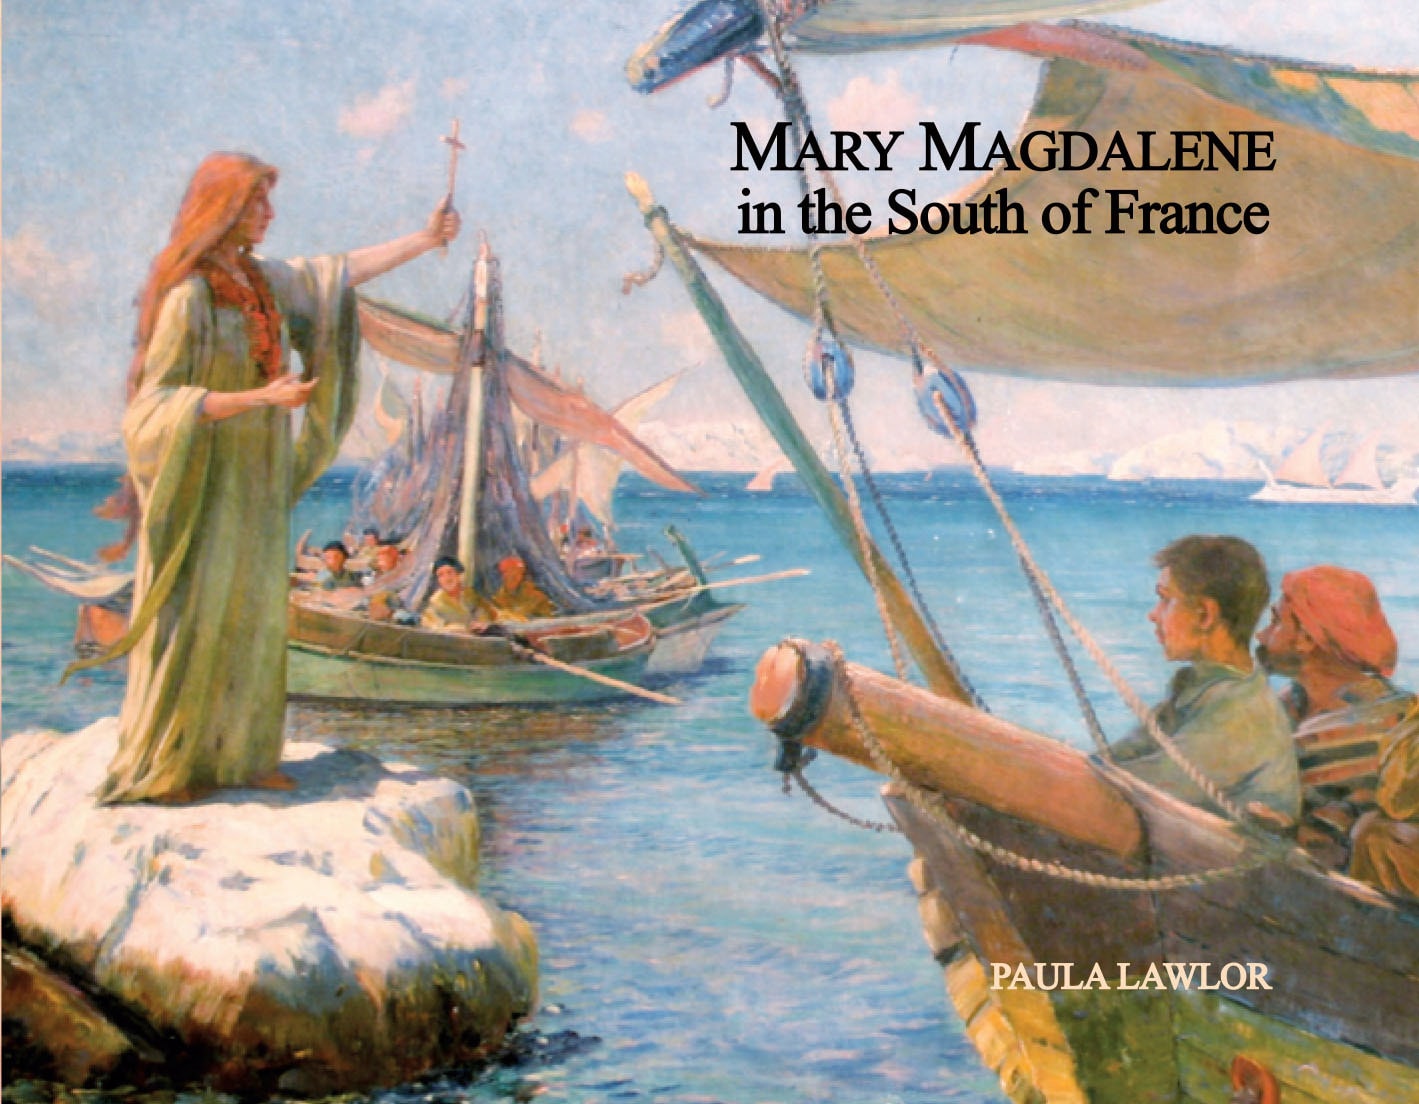 The Pilgrim's Stones – Magdala